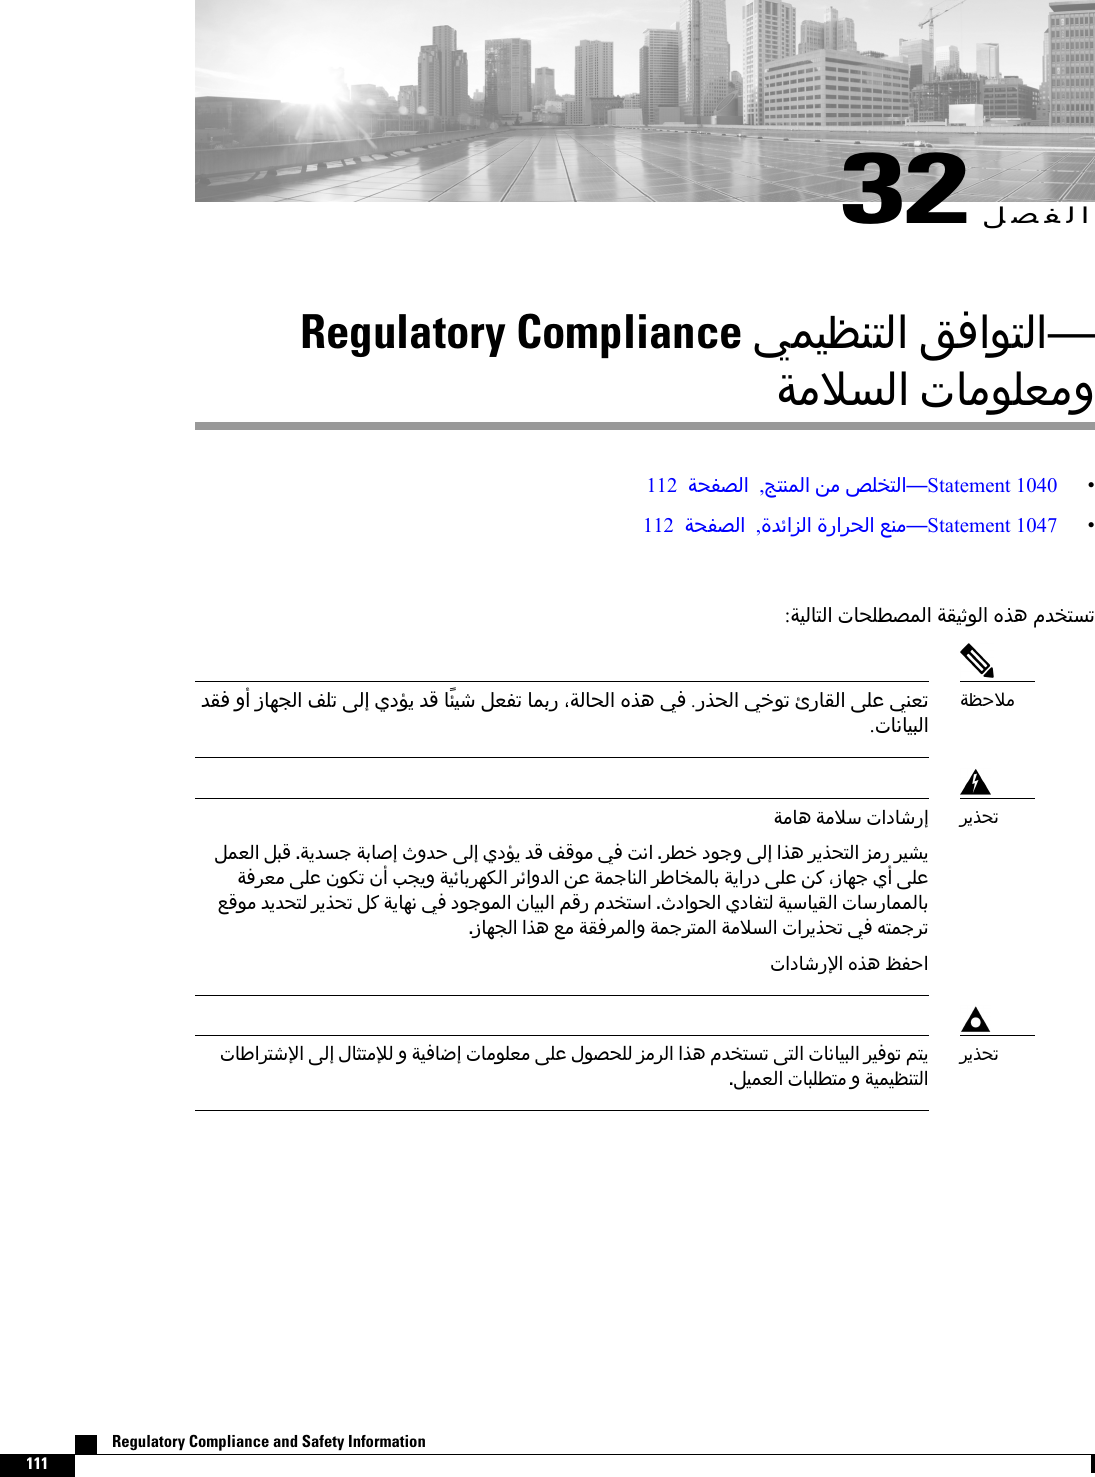 32󰂿󰂝󰂵󰃀Regulatory Compliance 󰃓󰃅󰃕󰂩󰃉󰁹󰃀 󰂷󰂴󰃏󰁹󰃀󰁵󰃄󰃝󰂕󰃀 󰁯󰃄󰃏󰃁󰂭󰃄112 󰁵󰂅󰂵󰂝󰃀 ,󰁿󰁹󰃉󰃅󰃀 󰃇󰃄 󰂛󰃁󰂉󰁹󰃀Statement 1040112 󰁵󰂅󰂵󰂝󰃀 ,󰂋󰁬󰂑󰃀 󰂏󰂅󰃀 󰂫󰃉󰃄Statement 1047:󰁵󰃕󰃀󰁯󰁹󰃀 󰁯󰂅󰃁󰂥󰂝󰃅󰃀 󰁵󰂹󰃕󰁼󰃏󰃀 󰂍󰃌 󰂋󰂉󰁹󰂕󰁸󰂋󰂹󰂴  󰁯󰃍󰂁󰃀 󰂳󰃁󰁸 󰃑󰃀 󰁧󰃔 󰂋󰂸 󰁯󰁭󰃕󰂘 󰂿󰂭󰂵󰁸 󰁯󰃅󰁲 󰁵󰃀󰁯󰂅󰃀 󰂍󰃌 󰃓󰂴 .󰂍󰂅󰃀 󰃓󰂈󰃏󰁸 󰁯󰂹󰃀 󰃑󰃁󰂬 󰃓󰃉󰂭󰁸.󰁯󰃈󰁯󰃕󰁳󰃀󰁵󰂩󰂄󰃝󰃄󰁵󰃄󰁯󰃌 󰁵󰃄󰃝󰂔 󰁯󰂘󰂿󰃅󰂭󰃀 󰂿󰁳󰂸 .󰁵󰃔󰂋󰂕󰂀 󰁵󰁲󰁯󰂜 󰂋󰂄 󰃑󰃀 󰁧󰃔 󰂋󰂸 󰂳󰂸󰃏󰃄 󰃓󰂴 󰁷󰃈 .󰂏󰂥󰂈 󰃏󰂀 󰃑󰃀 󰂍󰃌 󰂏󰃔󰂍󰂅󰁹󰃀 󰂑󰃄 󰂏󰃕󰂙󰃔󰁵󰂴󰂏󰂭󰃄 󰃑󰃁󰂬 󰃏󰂽󰁸  󰁱󰂁󰃔 󰁵󰃕󰁬󰁯󰁲󰂏󰃍󰂽󰃀 󰂏󰁬󰂋󰃀 󰃇󰂬 󰁵󰃅󰂀󰁯󰃉󰃀 󰂏󰂤󰁯󰂉󰃅󰃀󰁯󰁲 󰁵󰃔 󰃑󰃁󰂬 󰃇󰂼 󰁯󰃍󰂀  󰃑󰃁󰂬󰂫󰂸󰃏󰃄 󰂋󰃔󰂋󰂅󰁹󰃀 󰂏󰃔󰂍󰂅󰁸 󰂿󰂼 󰁵󰃔󰁯󰃍󰃈 󰃓󰂴 󰃏󰂀󰃏󰃅󰃀 󰁯󰃕󰁳󰃀 󰃃󰂸 󰂋󰂉󰁹󰂔 .󰃏󰂅󰃀 󰁯󰂵󰁹󰃀 󰁵󰃕󰂔󰁯󰃕󰂹󰃀 󰁯󰂔󰁯󰃅󰃅󰃀󰁯󰁲.󰁯󰃍󰂁󰃀 󰂍󰃌 󰂫󰃄 󰁵󰂹󰂴󰂏󰃅󰃀 󰁵󰃅󰂀󰂏󰁹󰃅󰃀 󰁵󰃄󰃝󰂕󰃀 󰂏󰃔󰂍󰂅󰁸 󰃓󰂴 󰃋󰁹󰃅󰂀󰂏󰁸󰁯󰂘󰃚 󰂍󰃌 󰂧󰂵󰂄󰂏󰃔󰂍󰂅󰁸󰁯󰂤󰂏󰁹󰂘󰃚 󰃑󰃀 󰁯󰁽󰁹󰃄󰃛󰃀  󰁵󰃕󰂴󰁯󰂠 󰁯󰃄󰃏󰃁󰂭󰃄 󰃑󰃁󰂬 󰃏󰂝󰂅󰃁󰃀 󰂑󰃄󰂏󰃀 󰂍󰃌 󰂋󰂉󰁹󰂕󰁸 󰃑󰁹󰃀 󰁯󰃈󰁯󰃕󰁳󰃀 󰂏󰃕󰂴󰃏󰁸 󰃃󰁹󰃔.󰂿󰃕󰃅󰂭󰃀 󰁯󰁳󰃁󰂥󰁹󰃄  󰁵󰃕󰃅󰃕󰂩󰃉󰁹󰃀󰂏󰃔󰂍󰂅󰁸Regulatory Compliance and Safety Information111